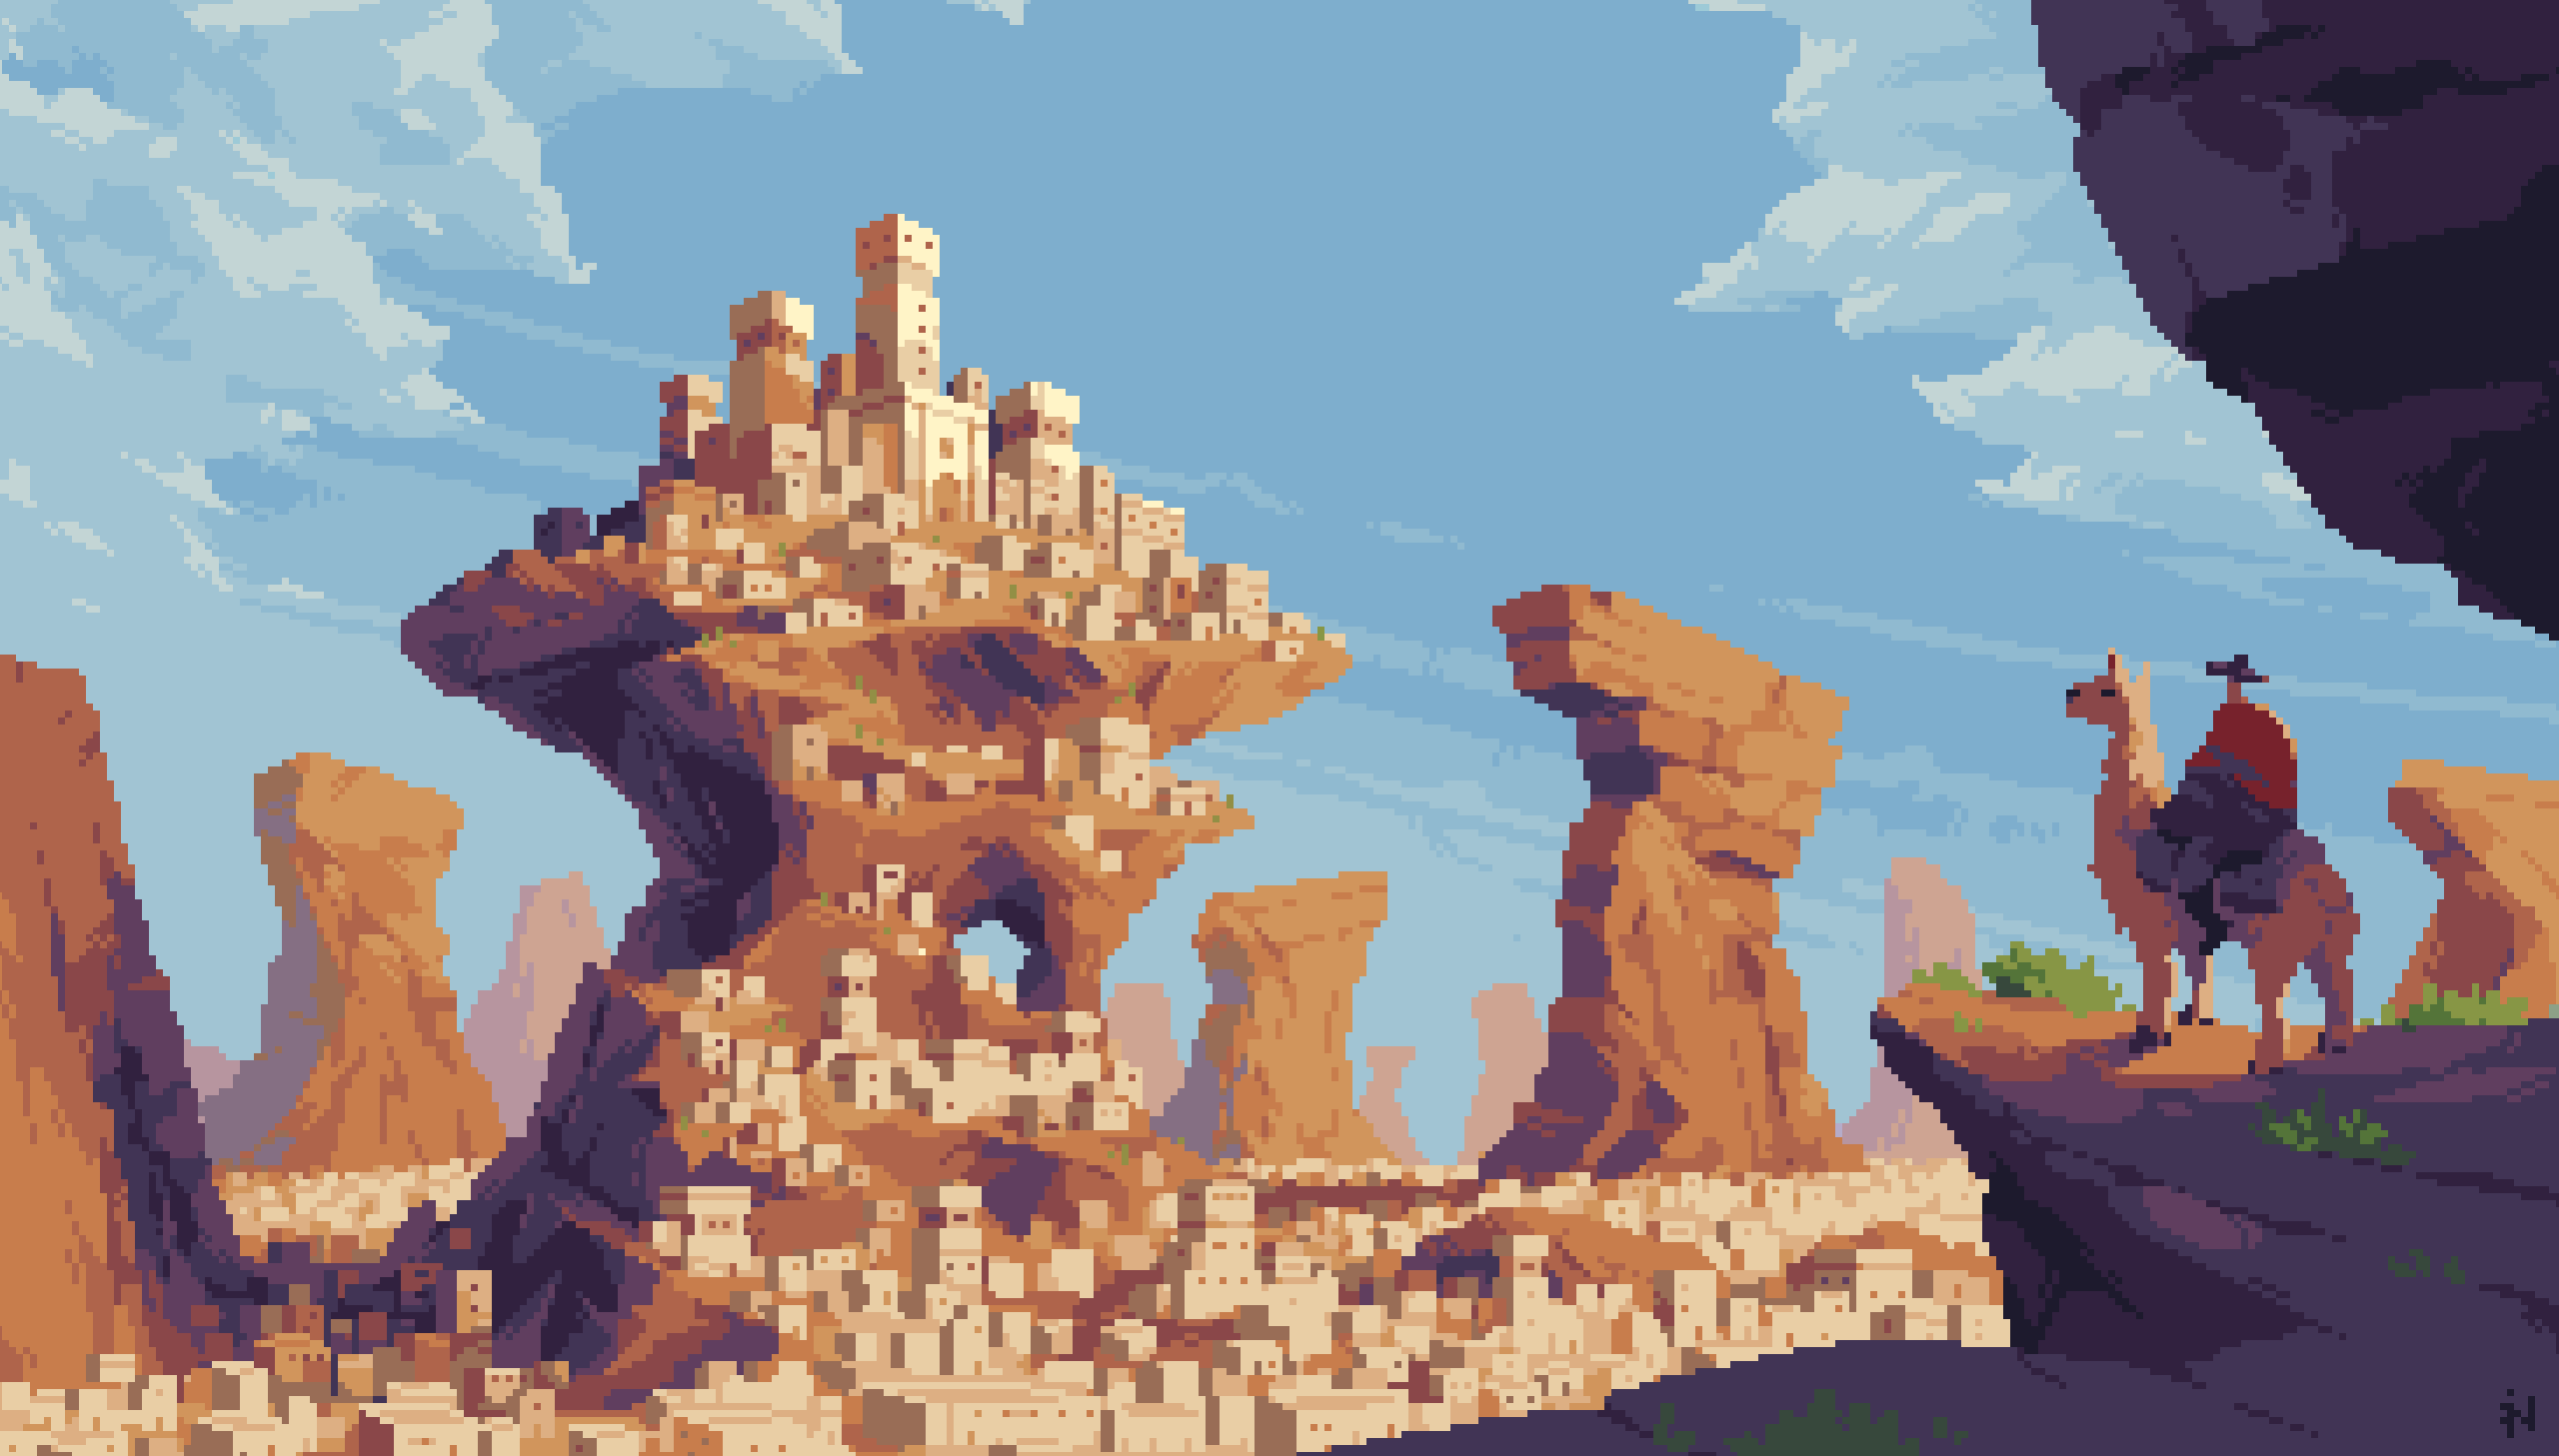 General 2560x1457 digital art pixel art pixelated pixels llamas mountains rocks rock formation cowboy village tower house